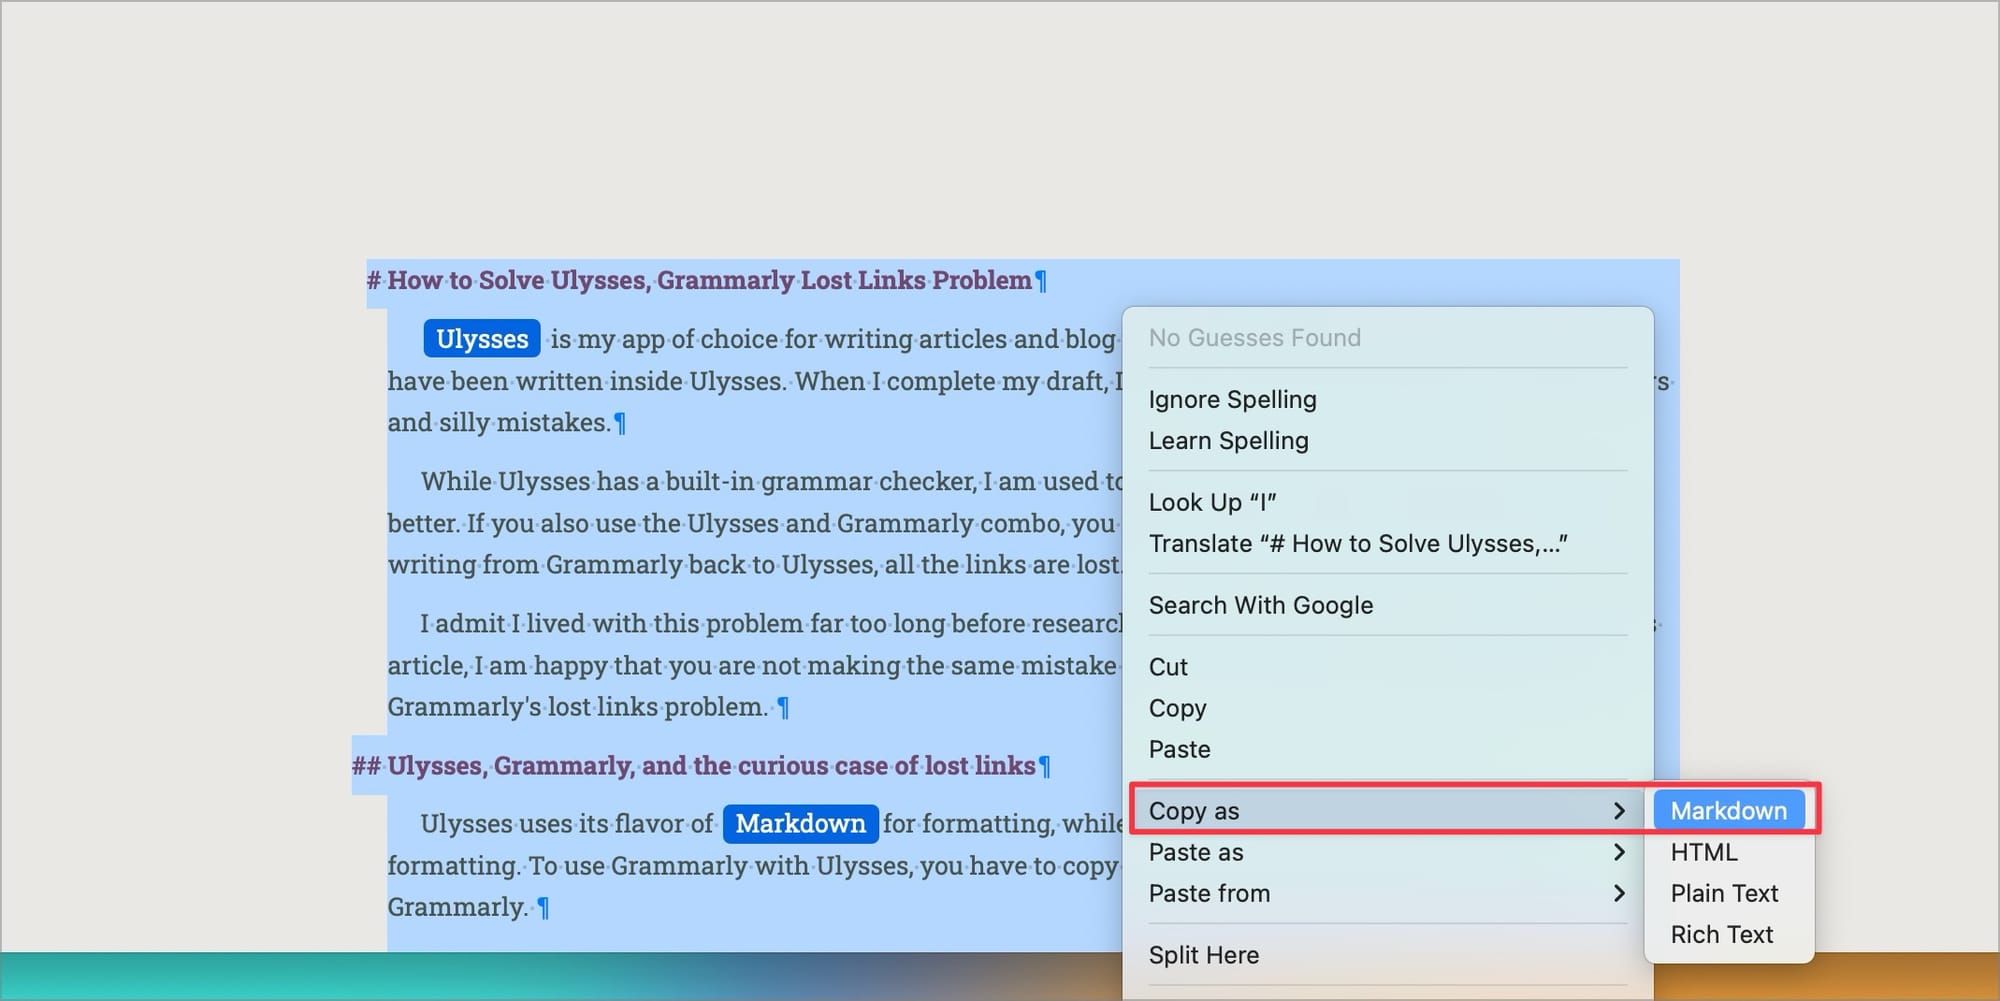 Copying text as markdown using Copy as menu in Ulysses